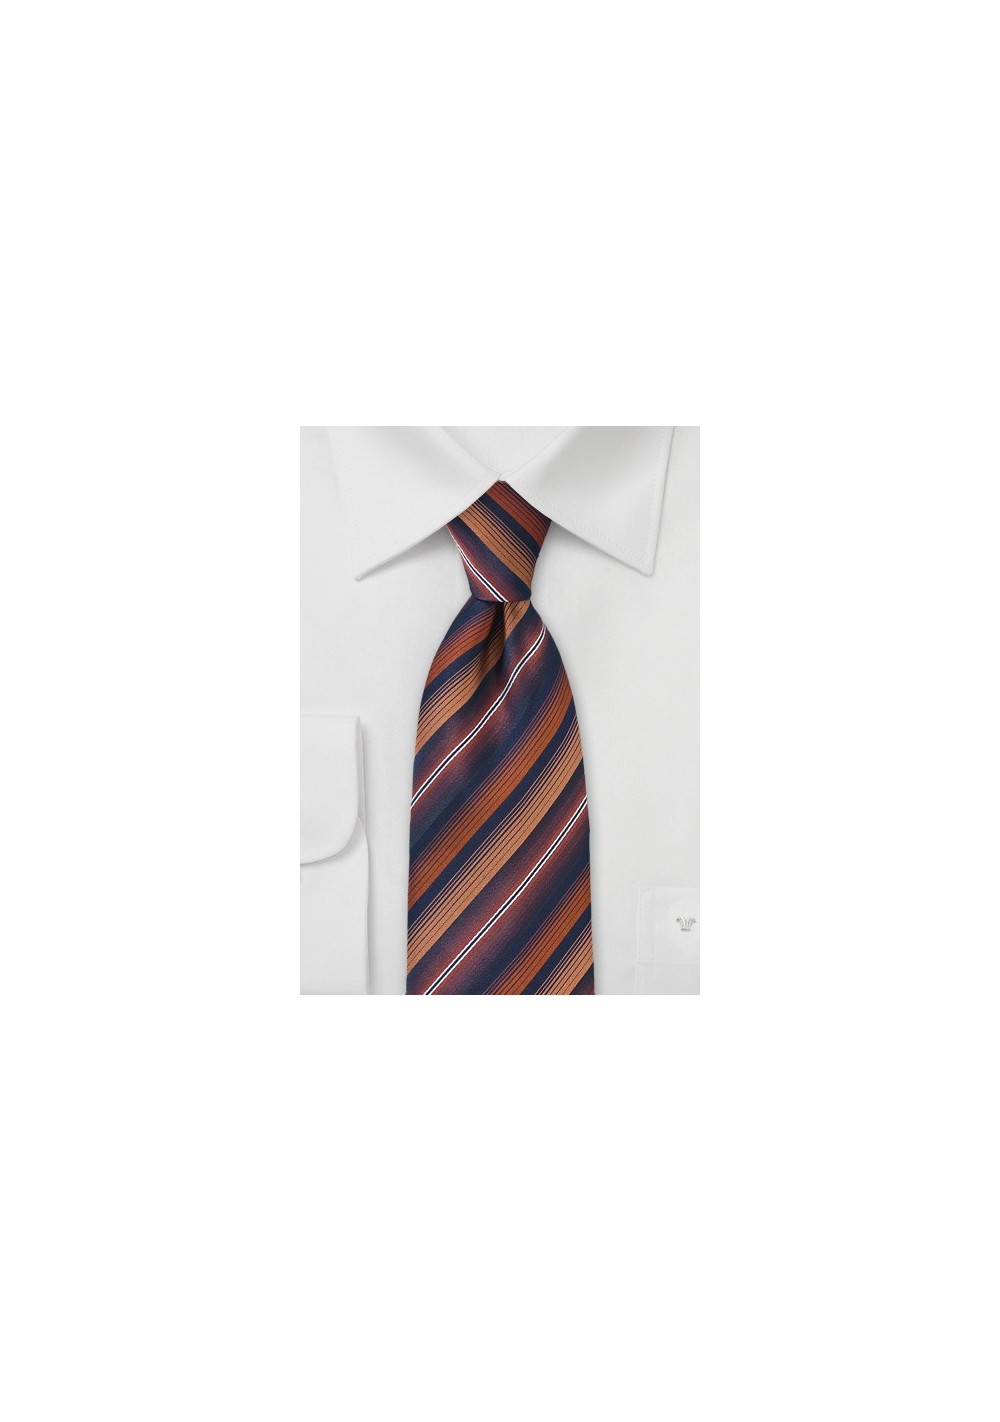 Navy Tie with Burnt Orange Stripes